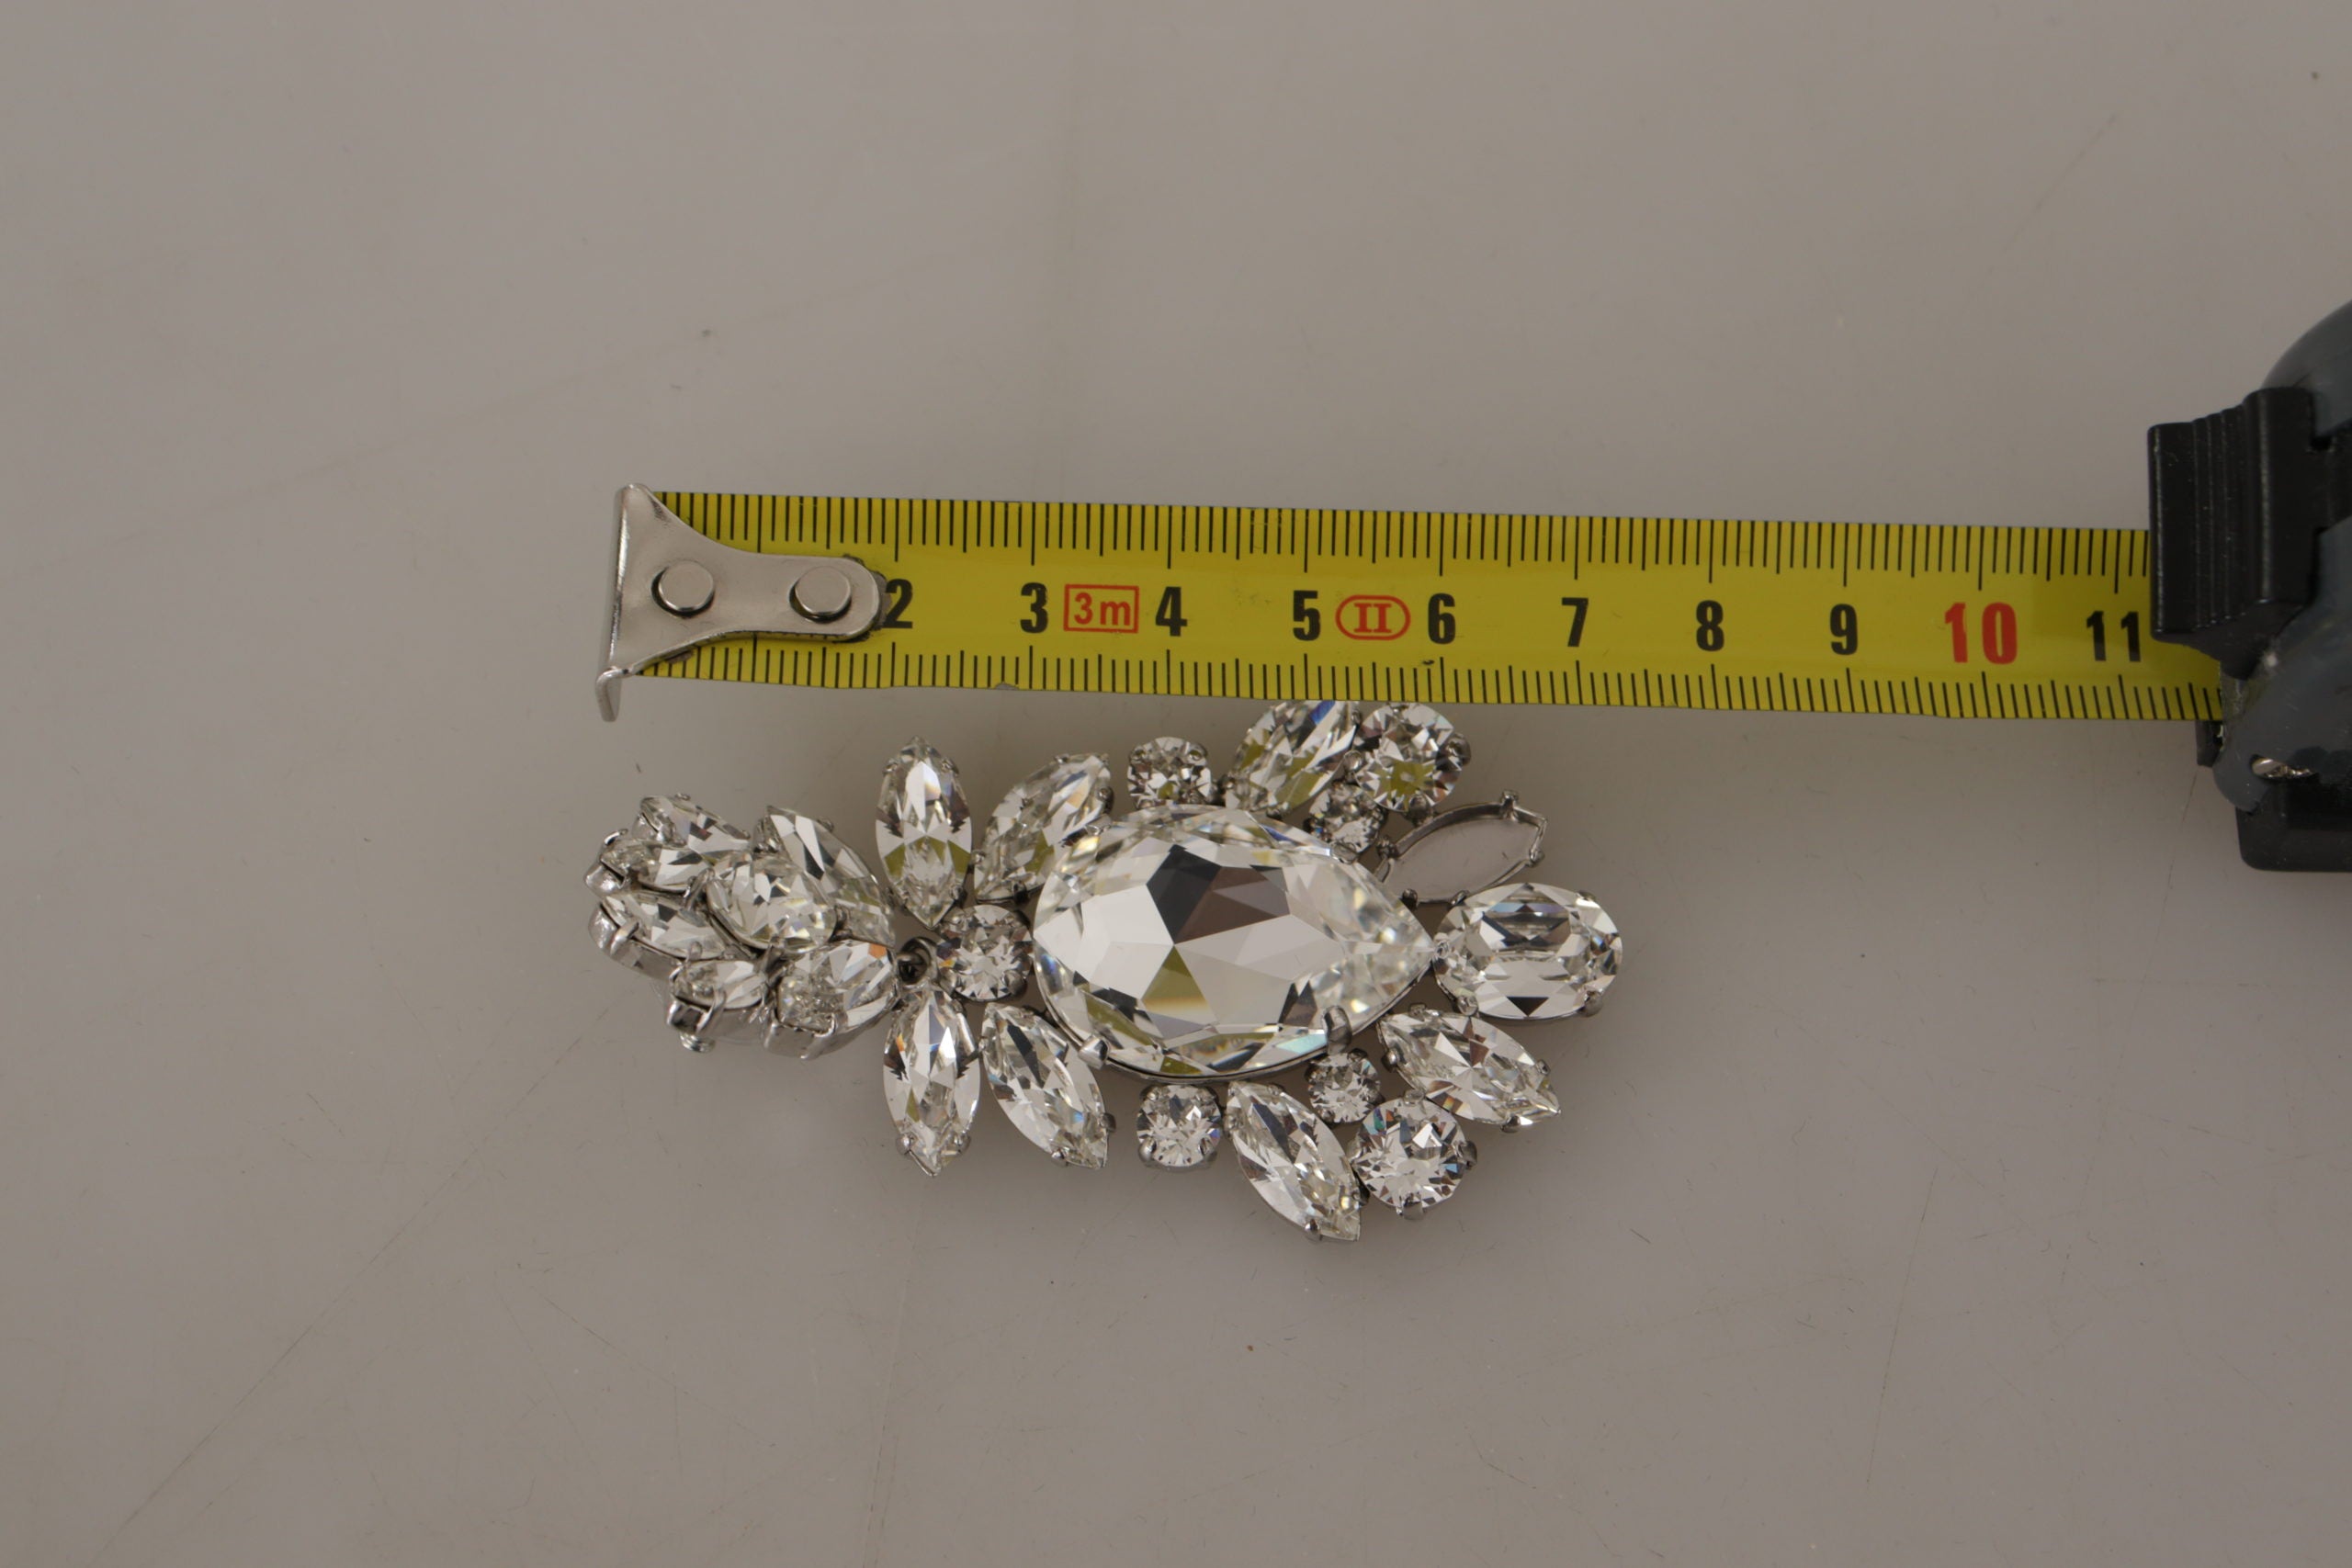 Dolce & Gabbana Elegant Large Baroque Crystal Brooch